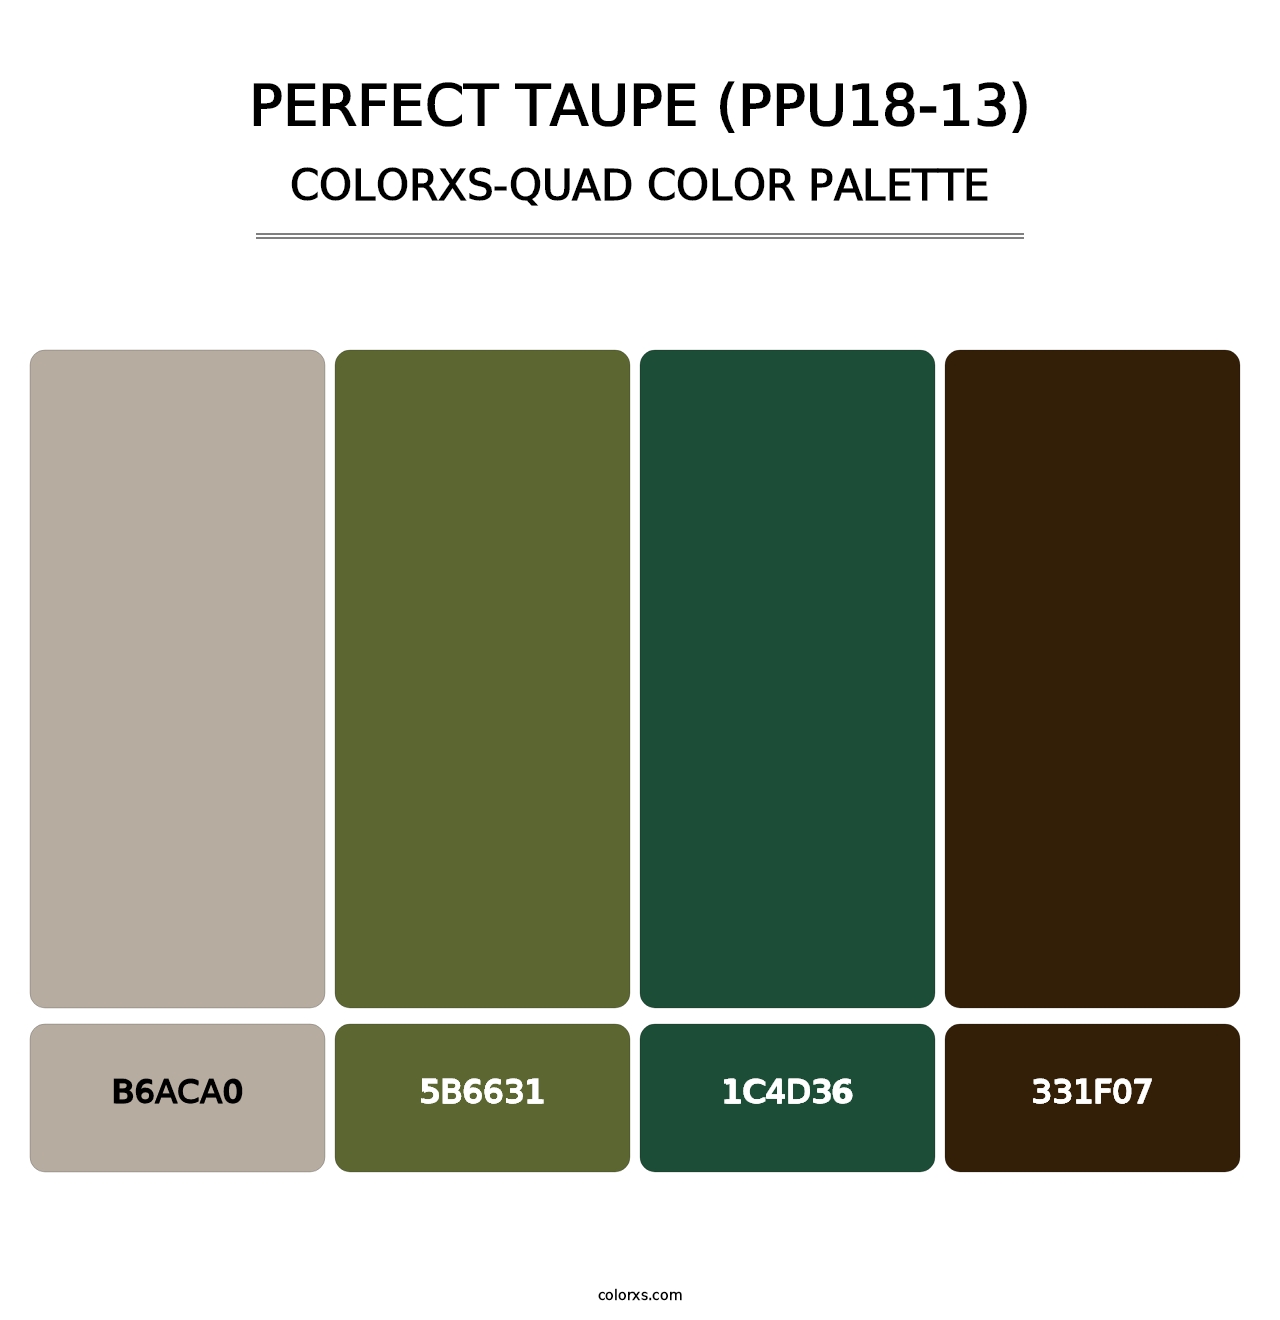 Perfect Taupe (PPU18-13) - Colorxs Quad Palette